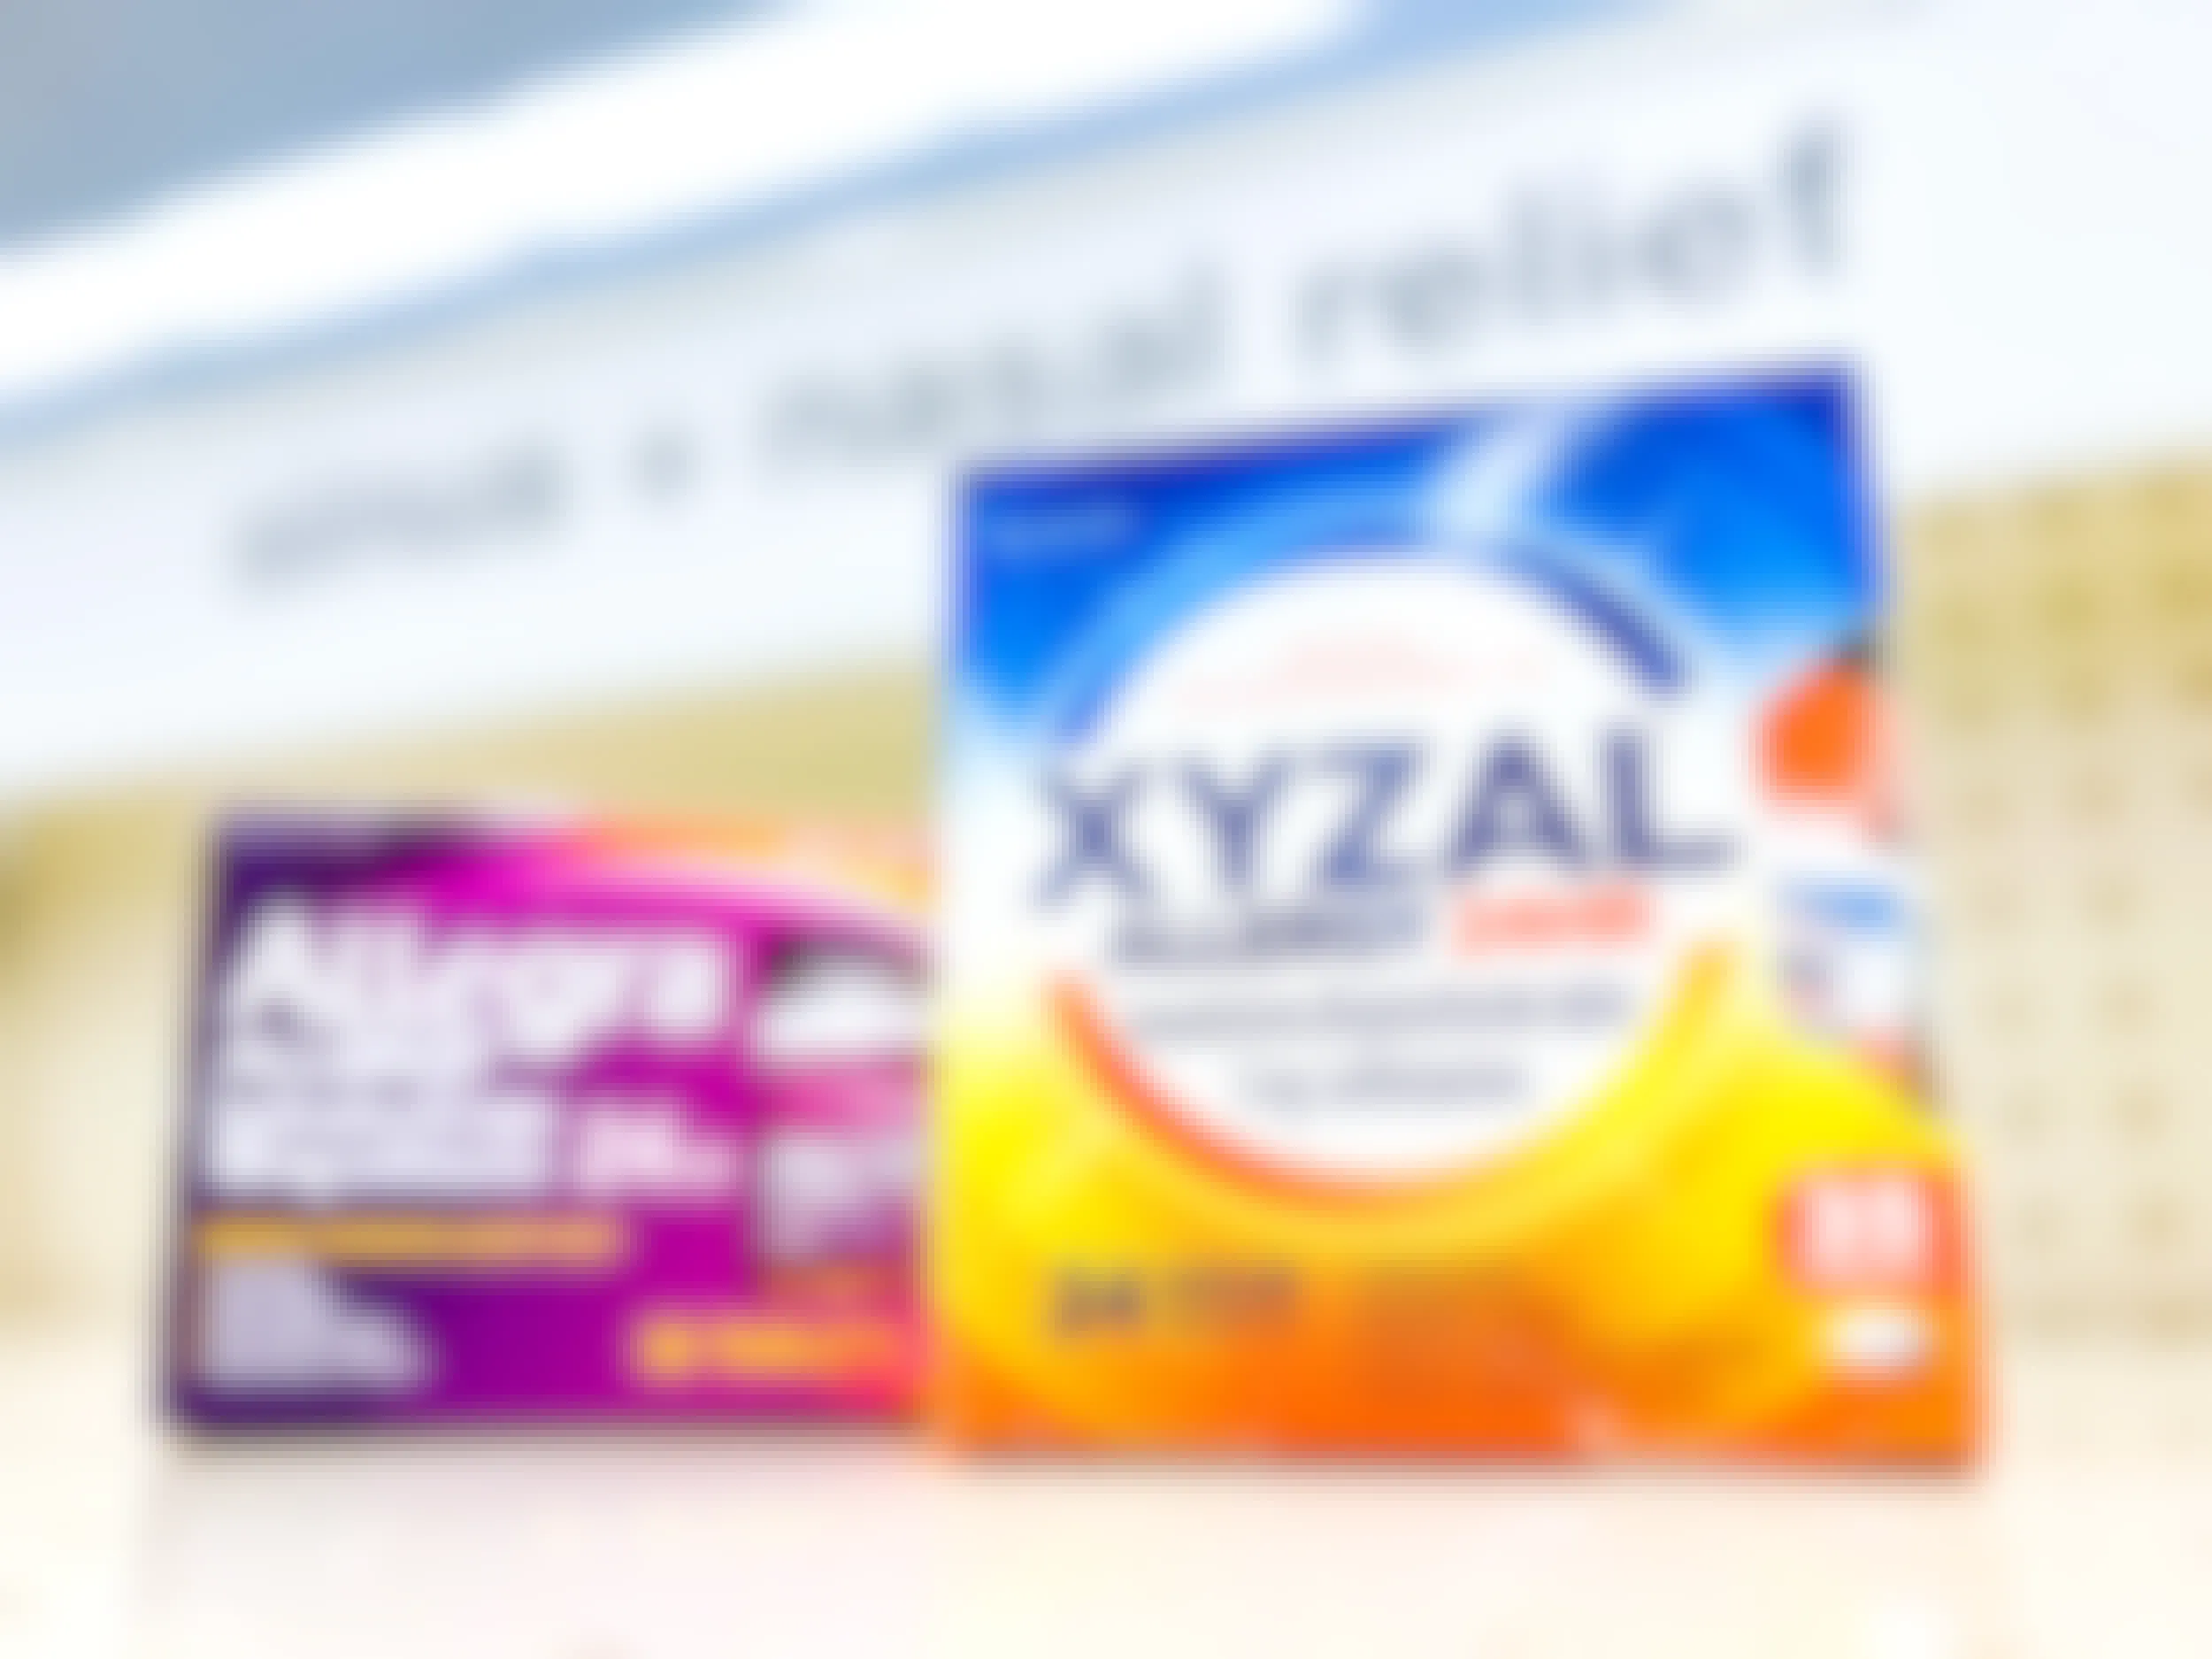 allegra and xyzal allergy medication in walgreens pharmacy aisle